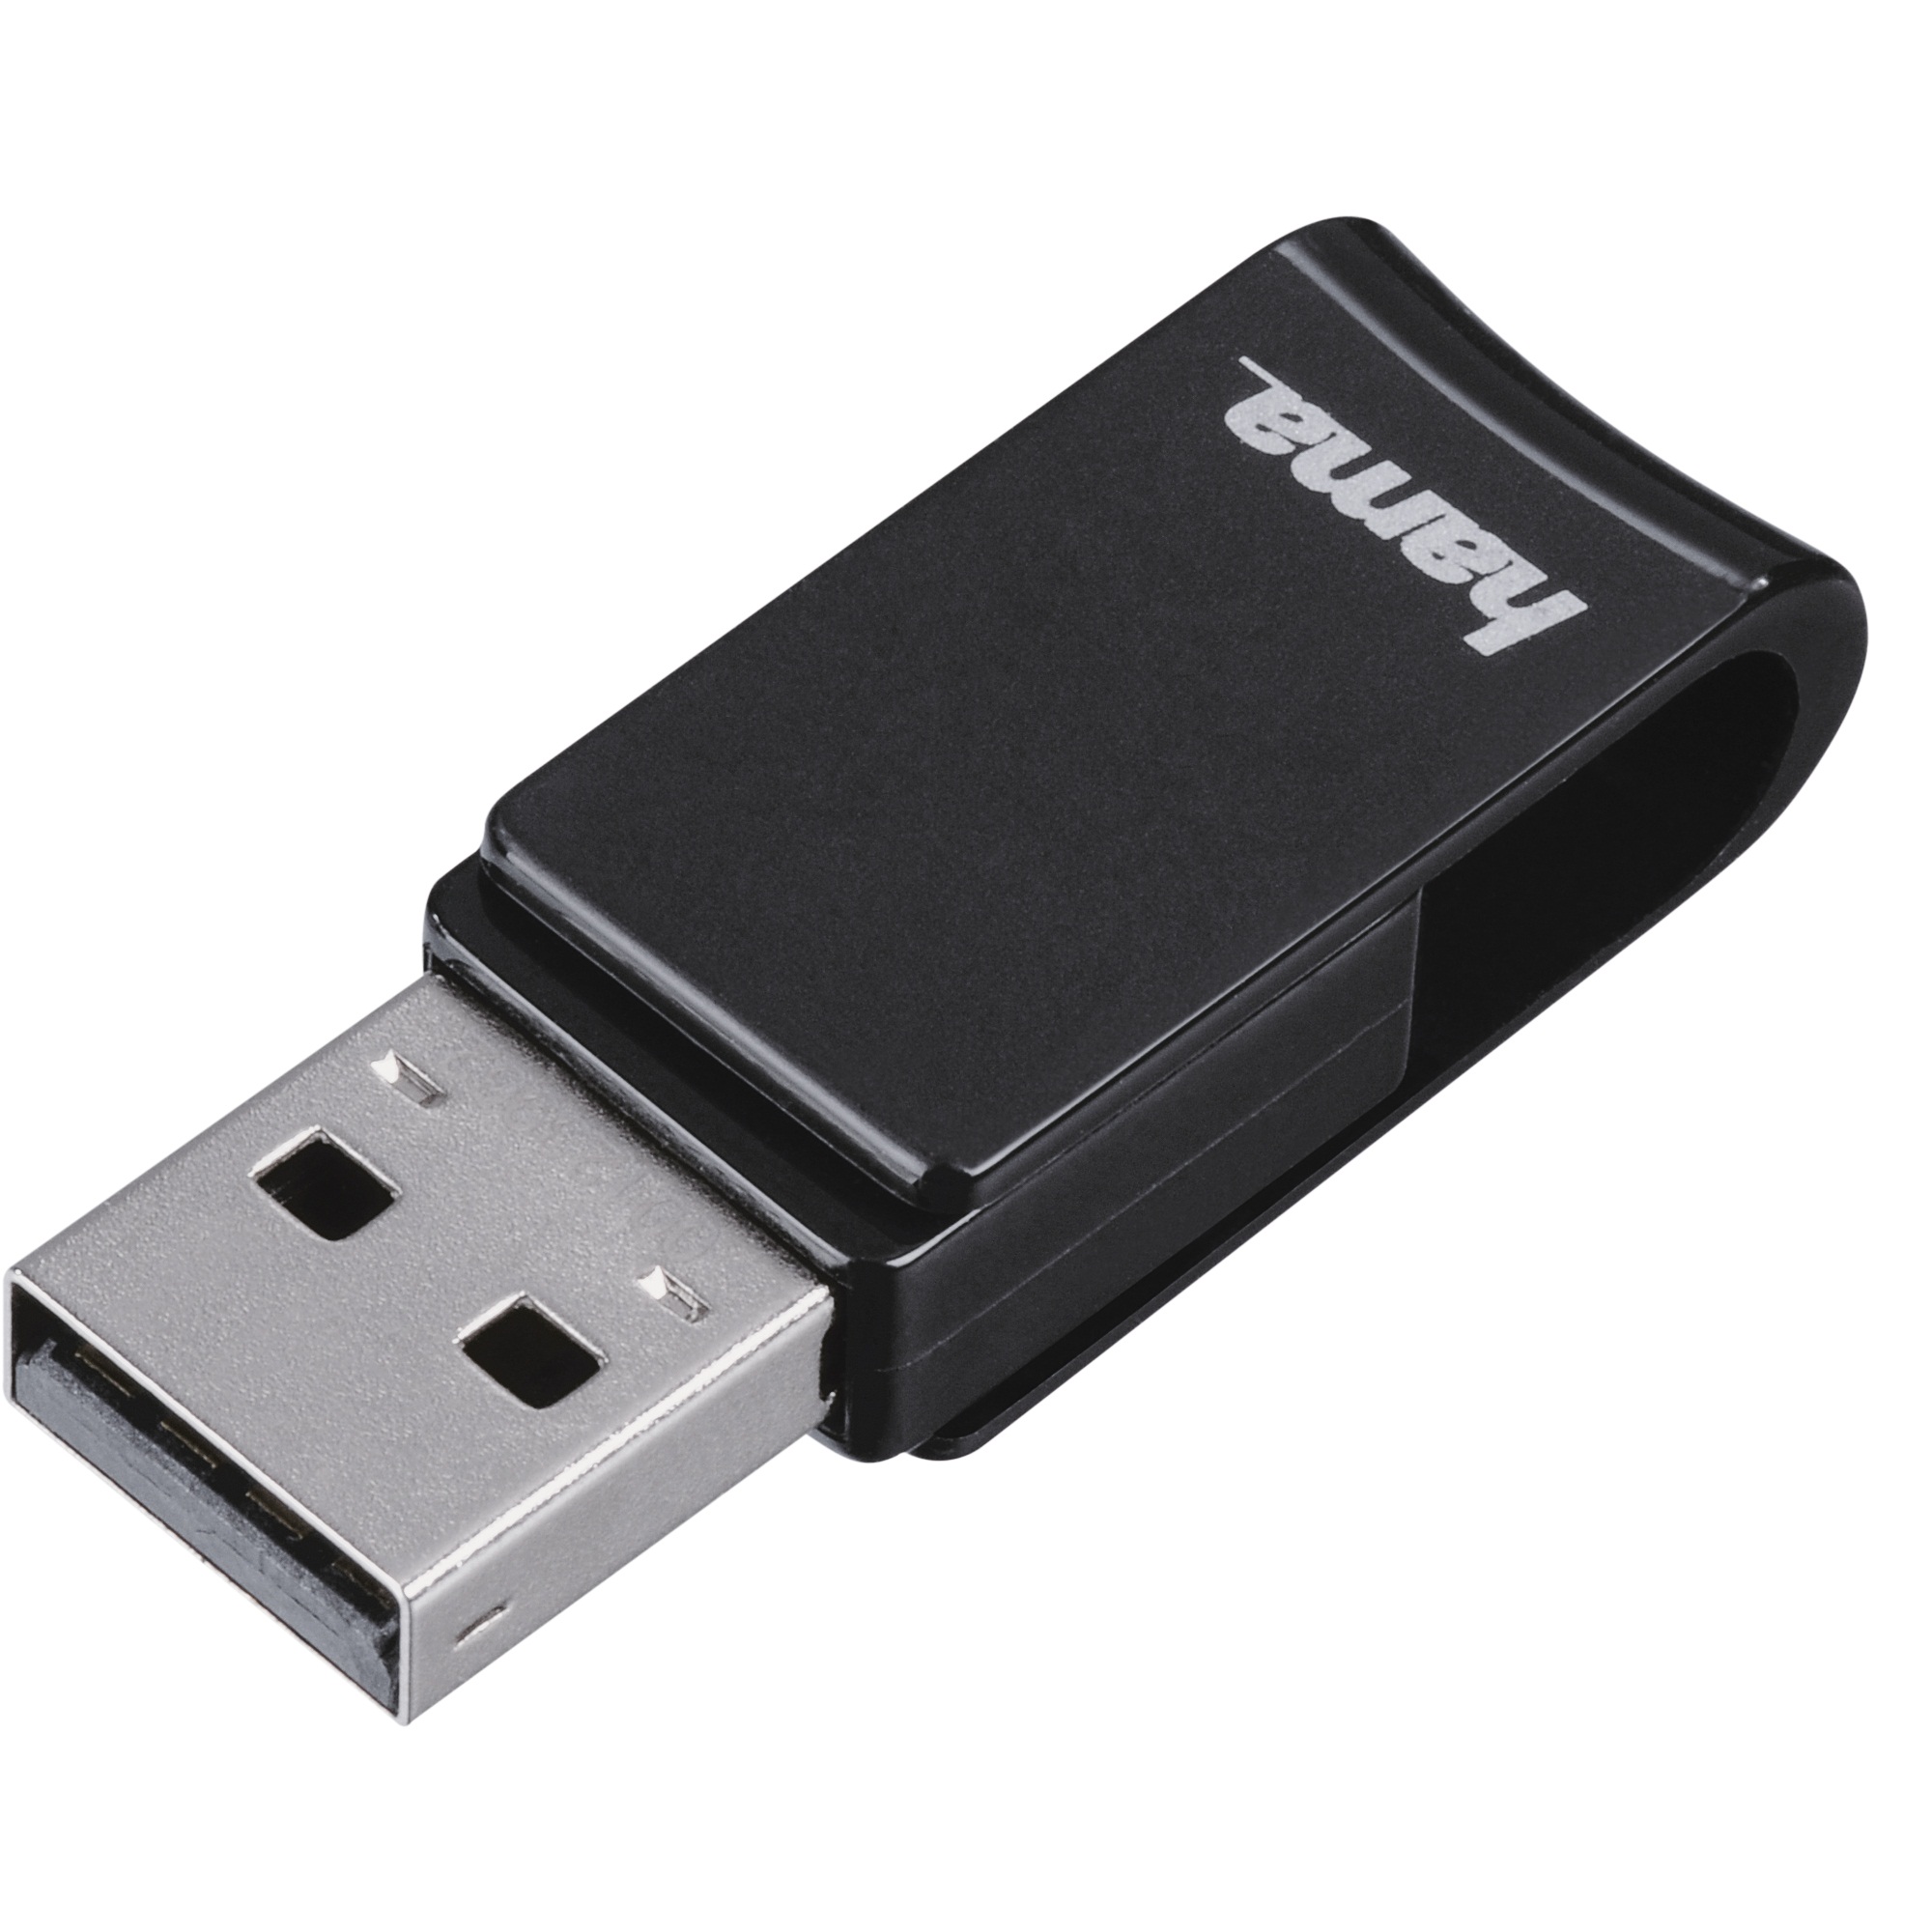  Memorie USB Hama Turn 123961, 16GB, USB 2.0, Negru 